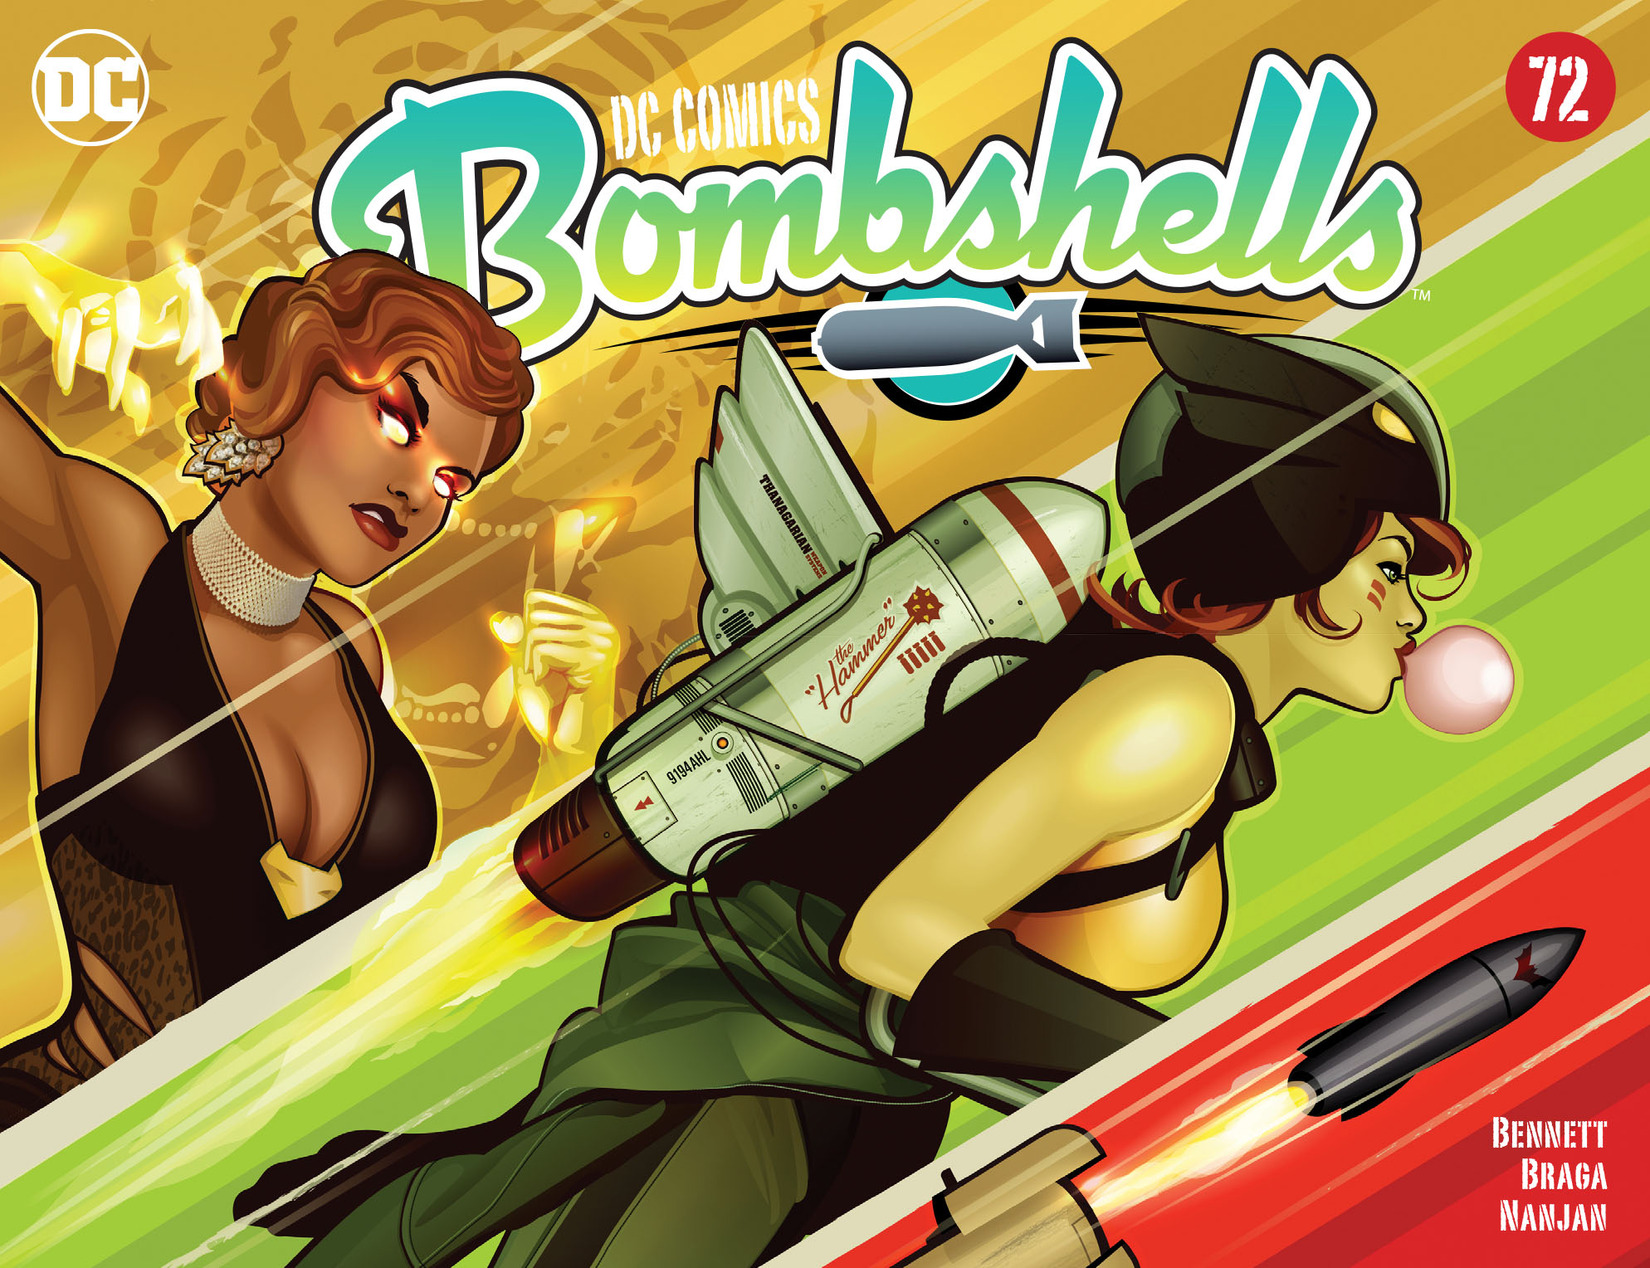 DC Comics - Bombshells (2015-): Chapter 72 - Page 1